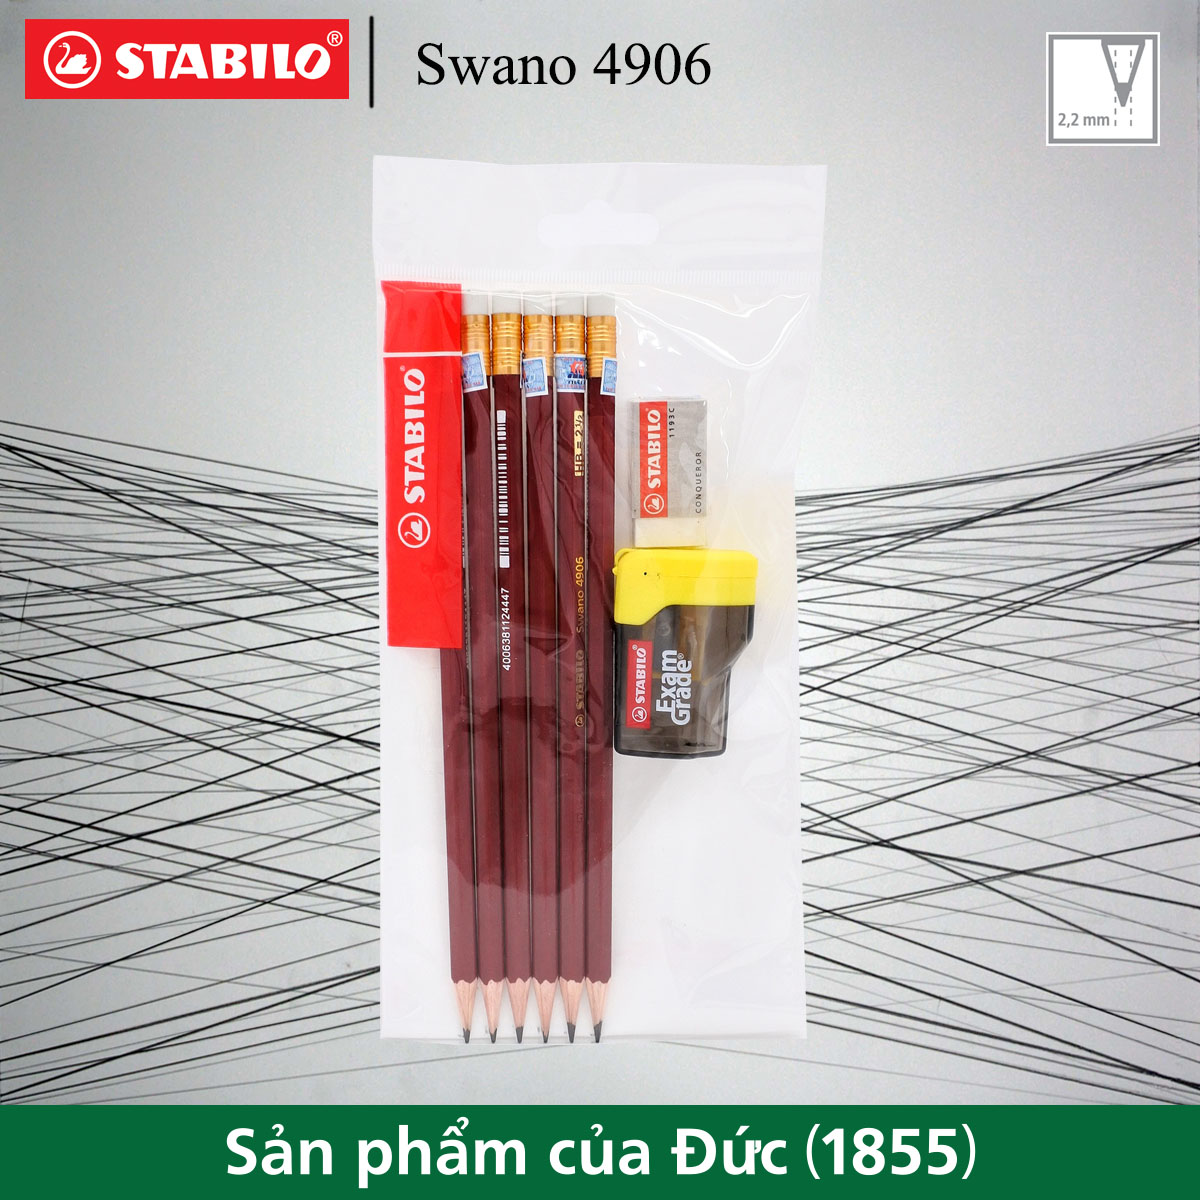 Bộ 6 bút chì gỗ STABILO Swano 4906 HB